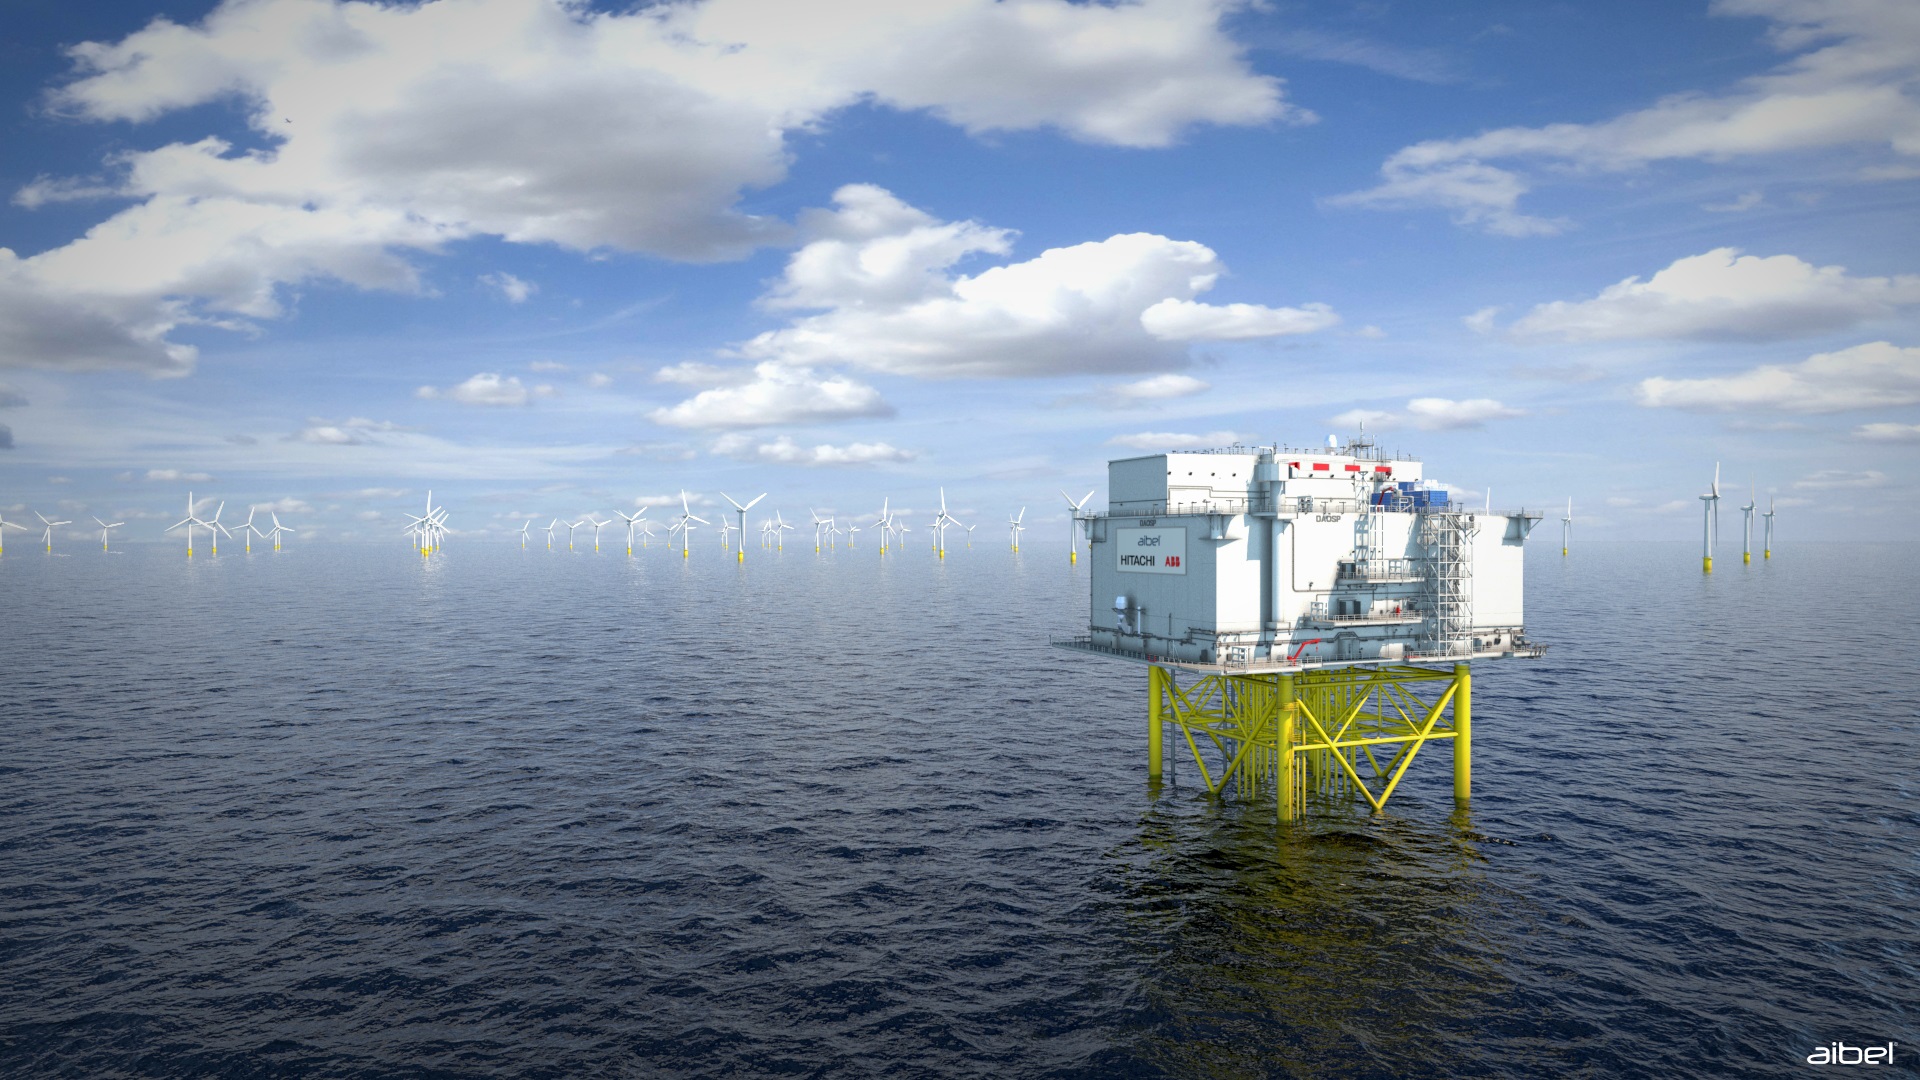 An image rendering converter platform at an offshore wind farm